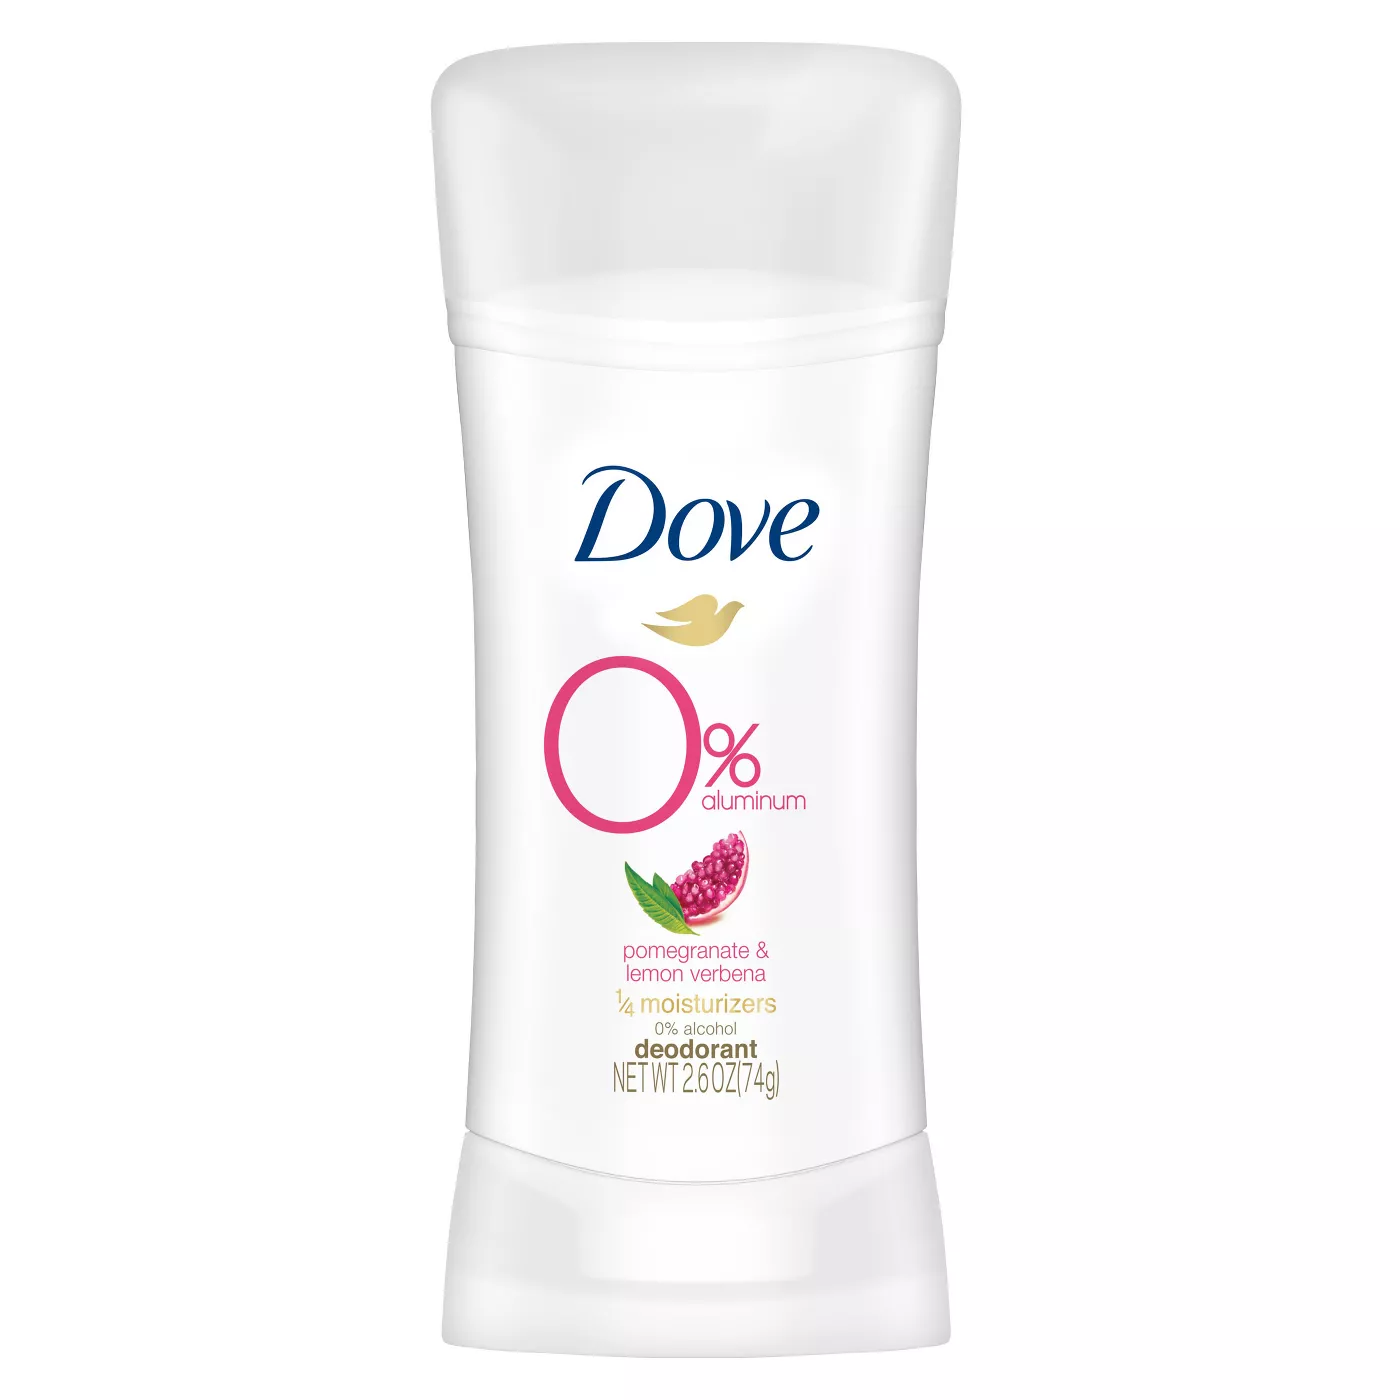 Dove 0% Aluminum Pomegranate & Lemon Verbena Deodorant Stick - 2.6oz - image 1 of 6